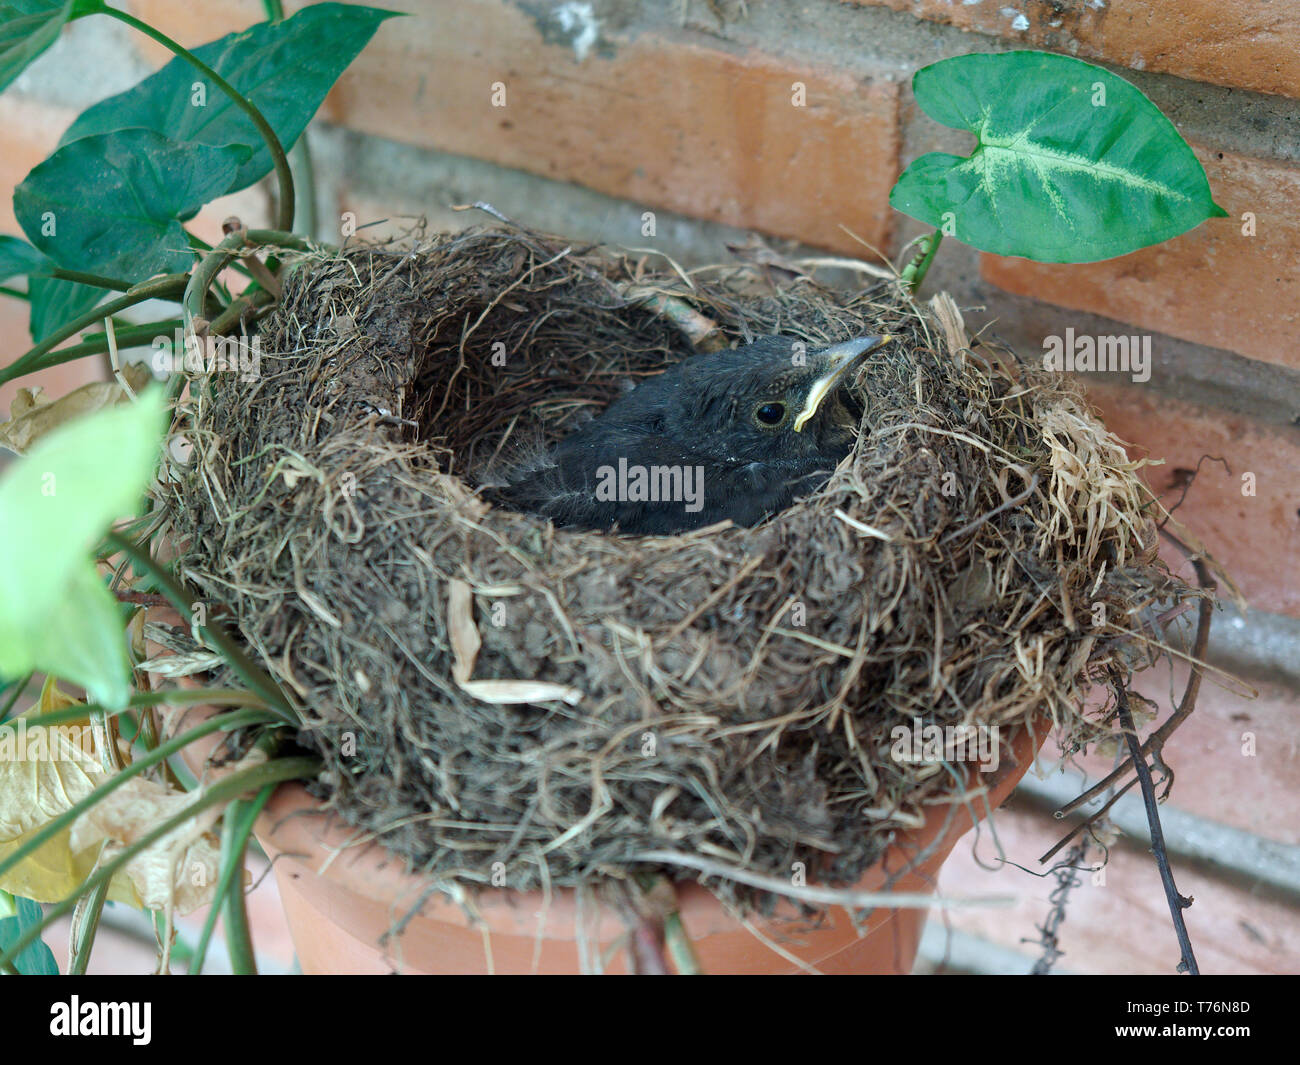 A newborn Glossy-black thrush (Turdus serranus) on its nest built on a plant pot in Villa de Merlo, San Luis, Argentina. Stock Photo